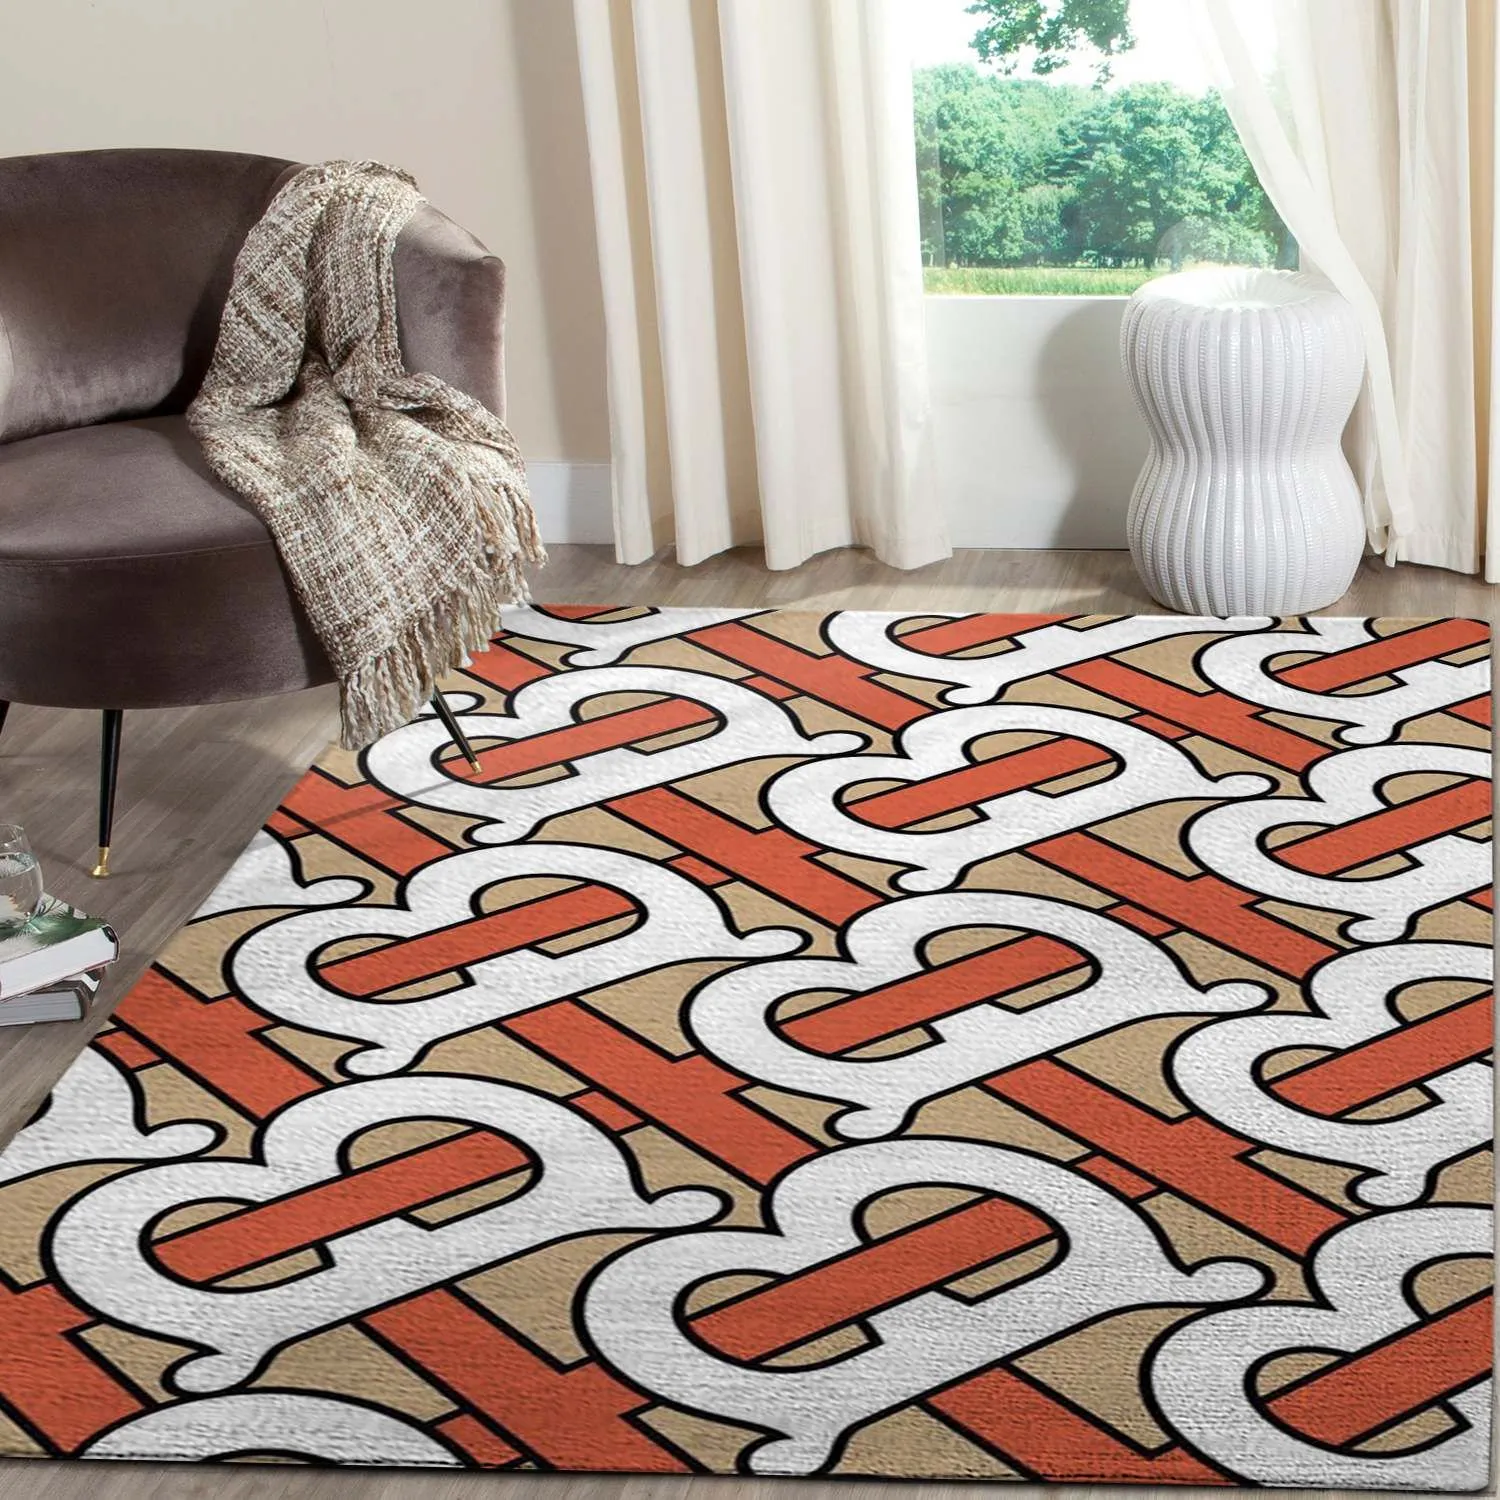 Burberry Rectangle Rug Luxury Fashion Brand Door Mat Area Carpet Home Decor